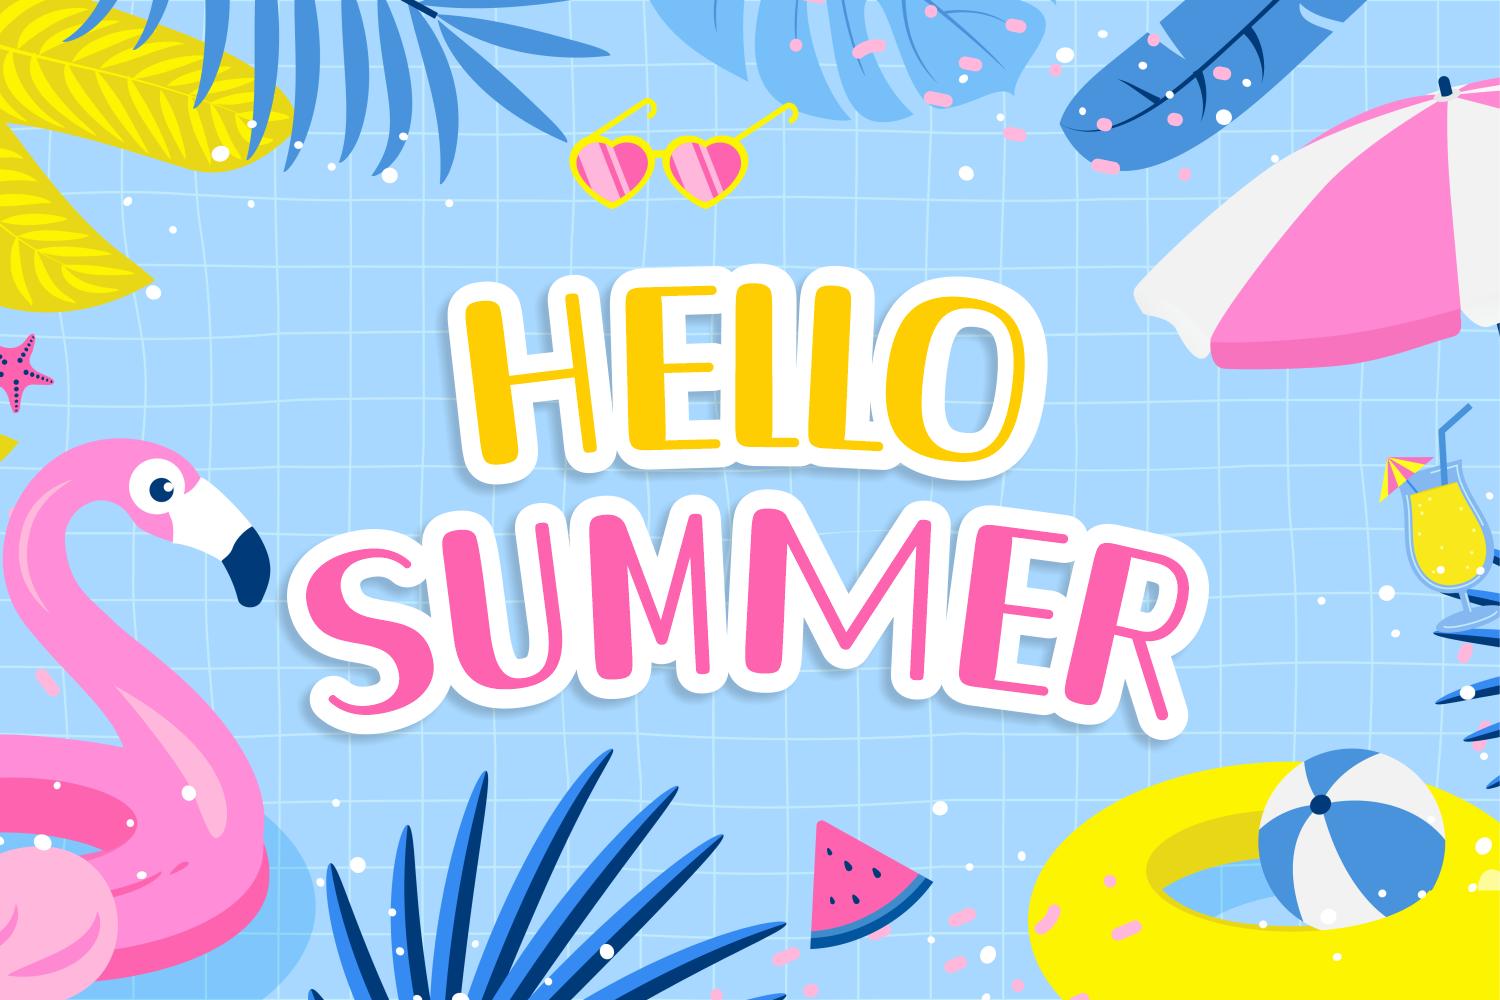 Hello Summer Font